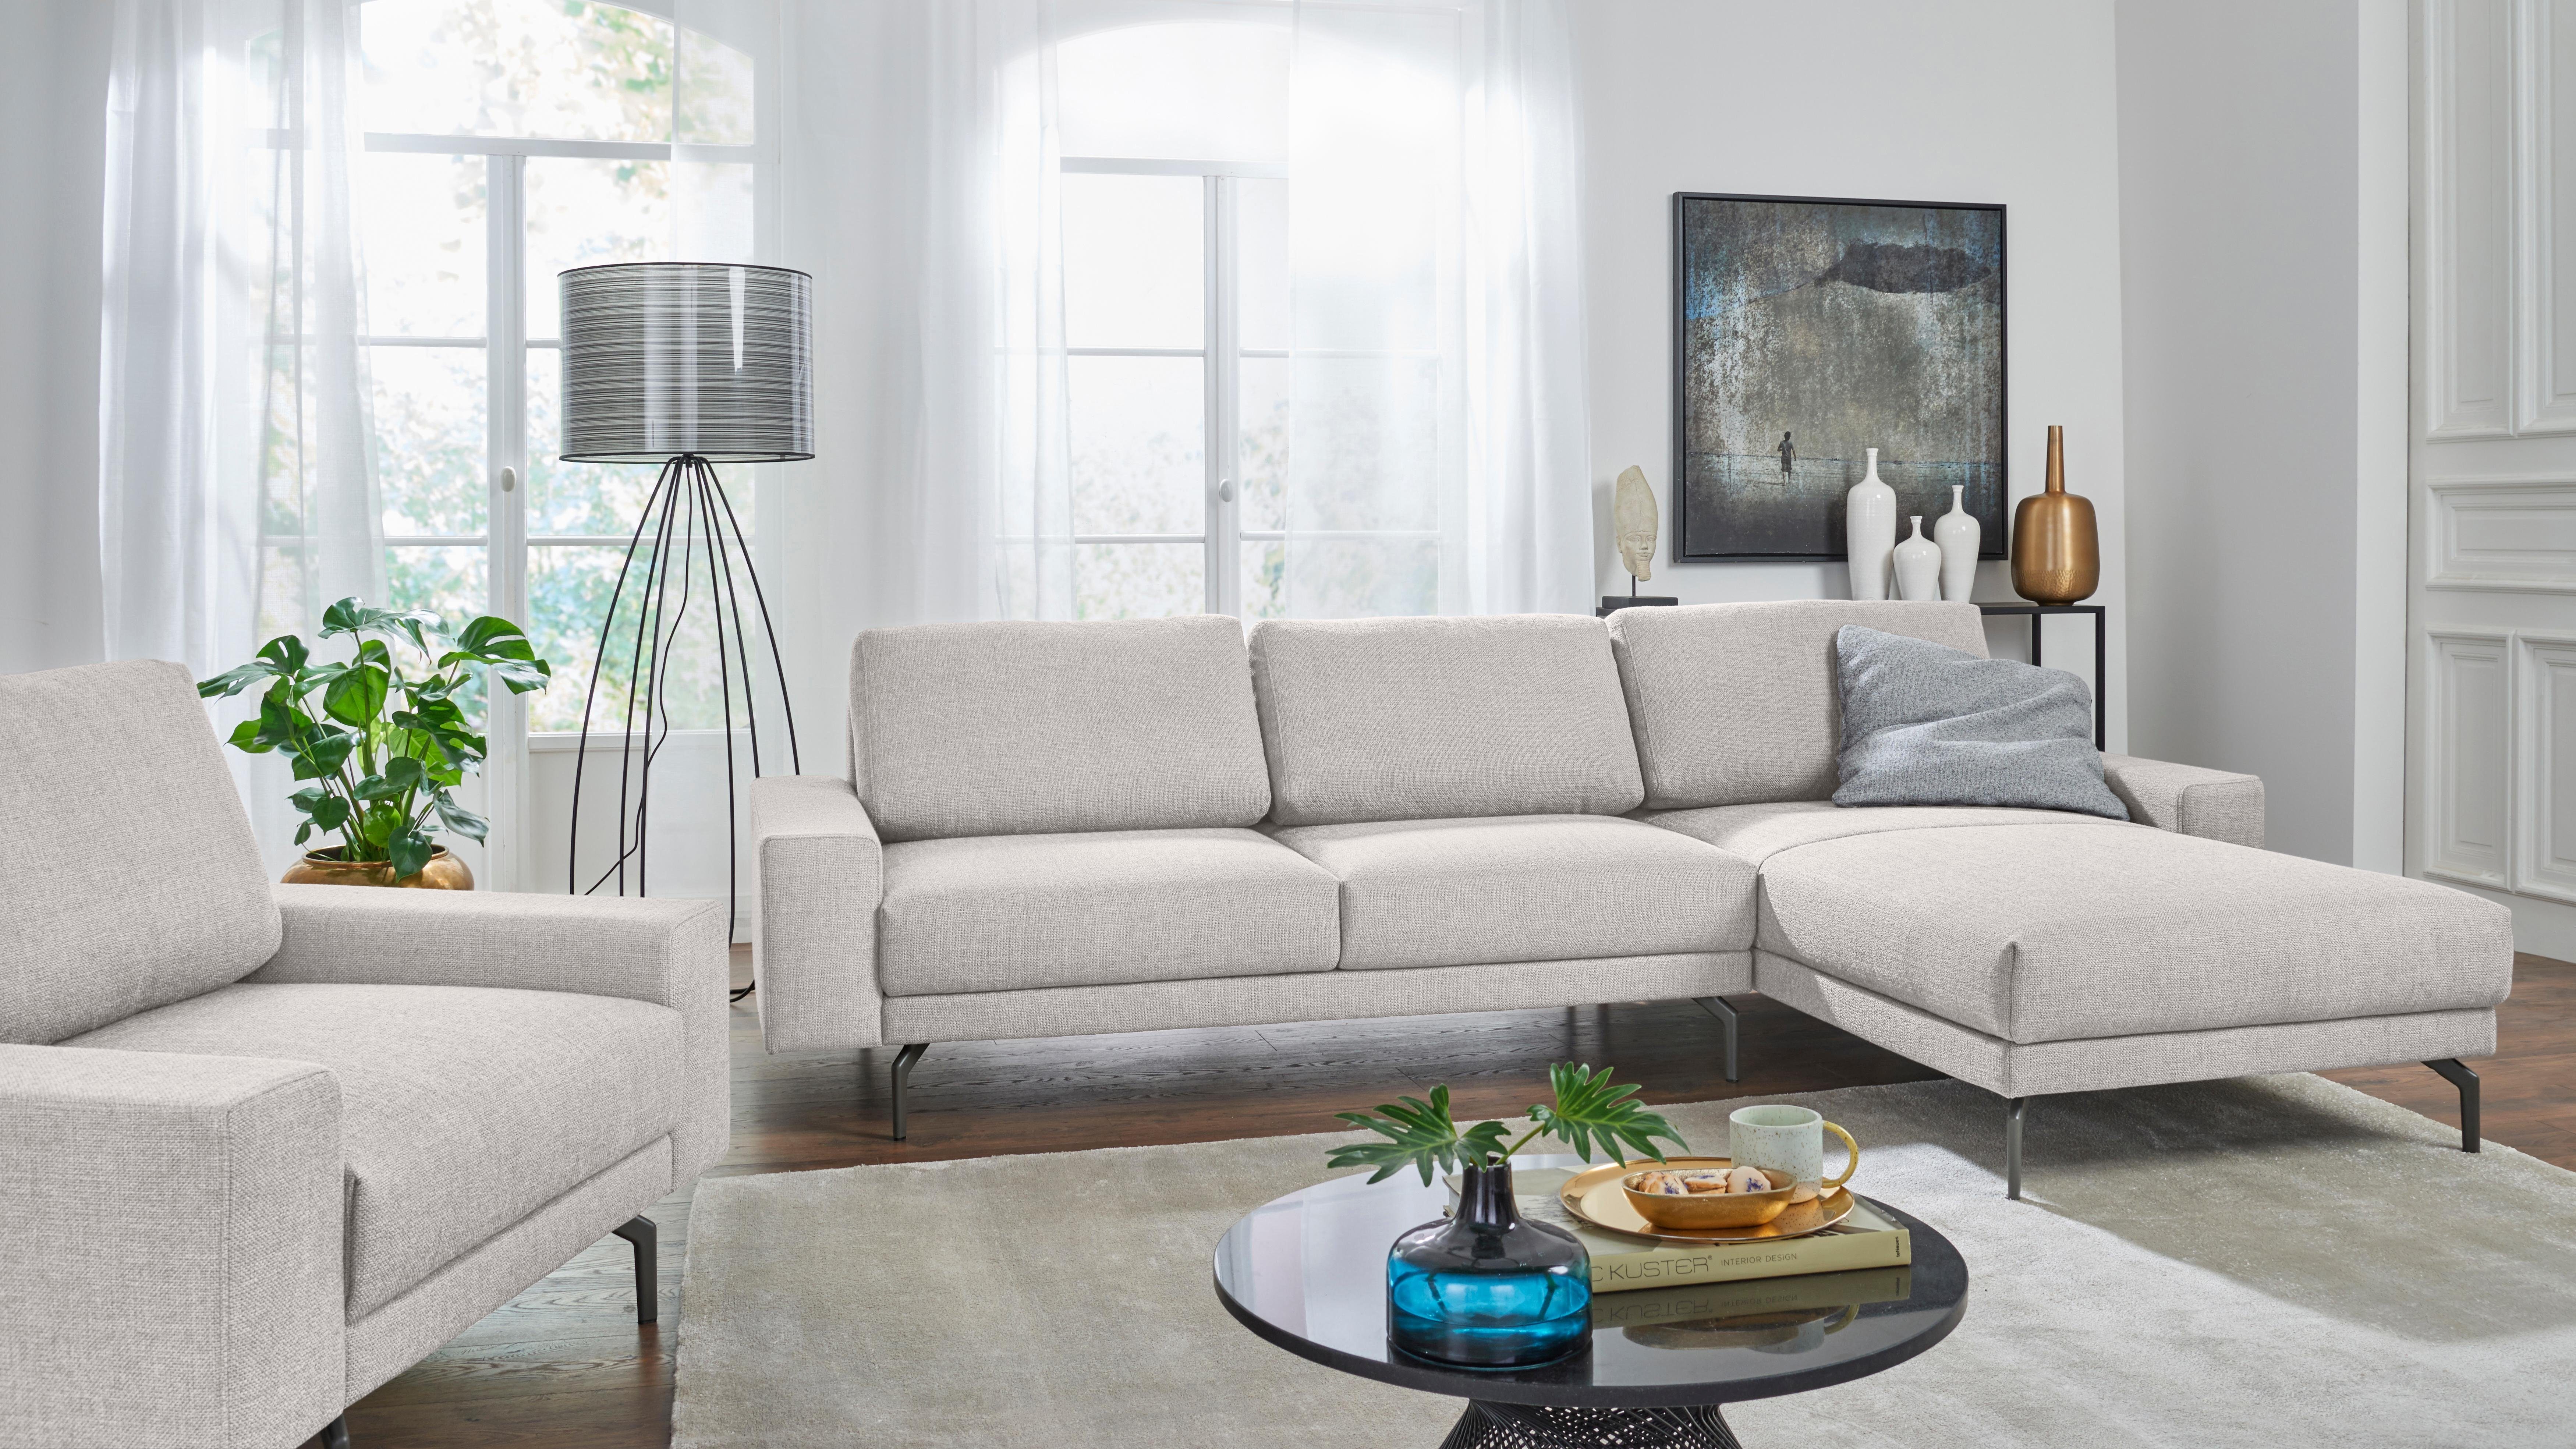 hülsta sofa Ecksofa hs.450, Armlehne breit und niedrig, Alugussfüße in umbragrau, Breite 274 cm